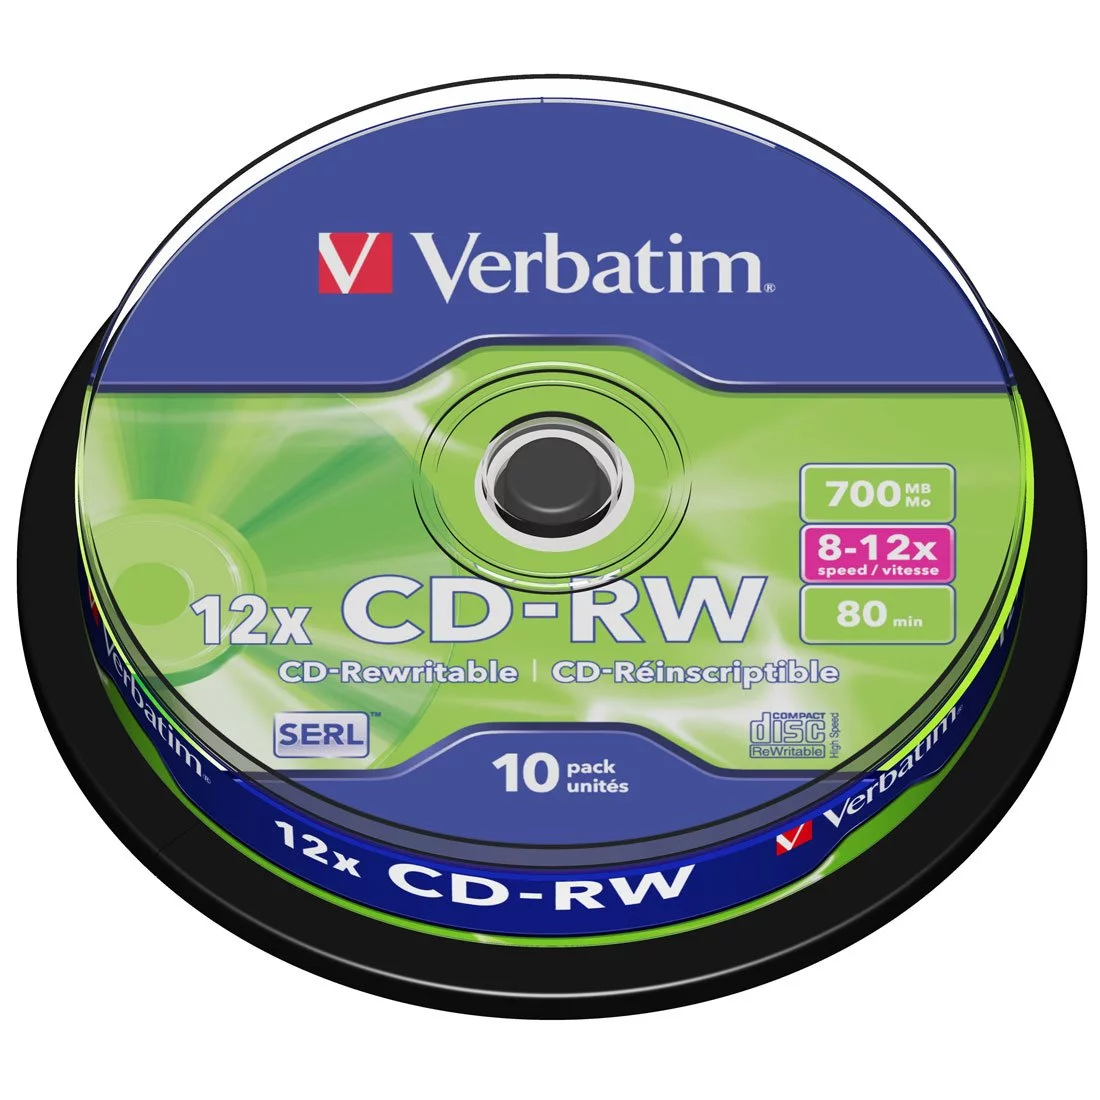 Verbatim CD-RW 700 Mo 12x (boite de 10) - CD vierge - LDLC